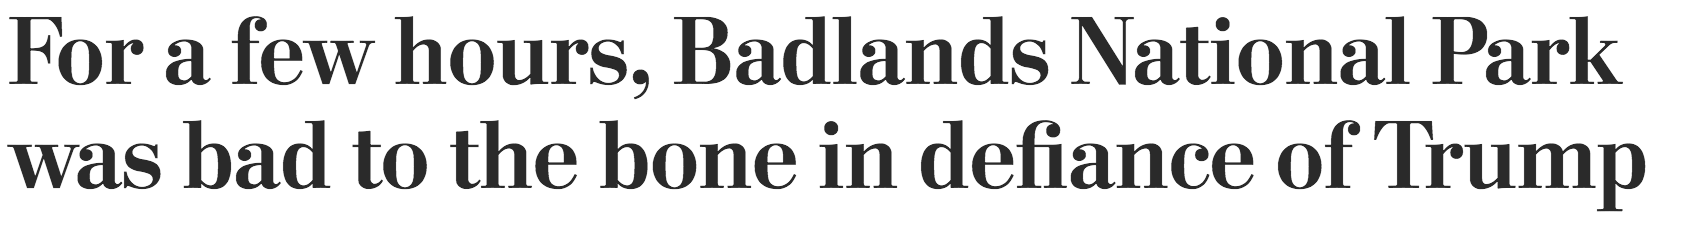 The Washington Post Badlands headline